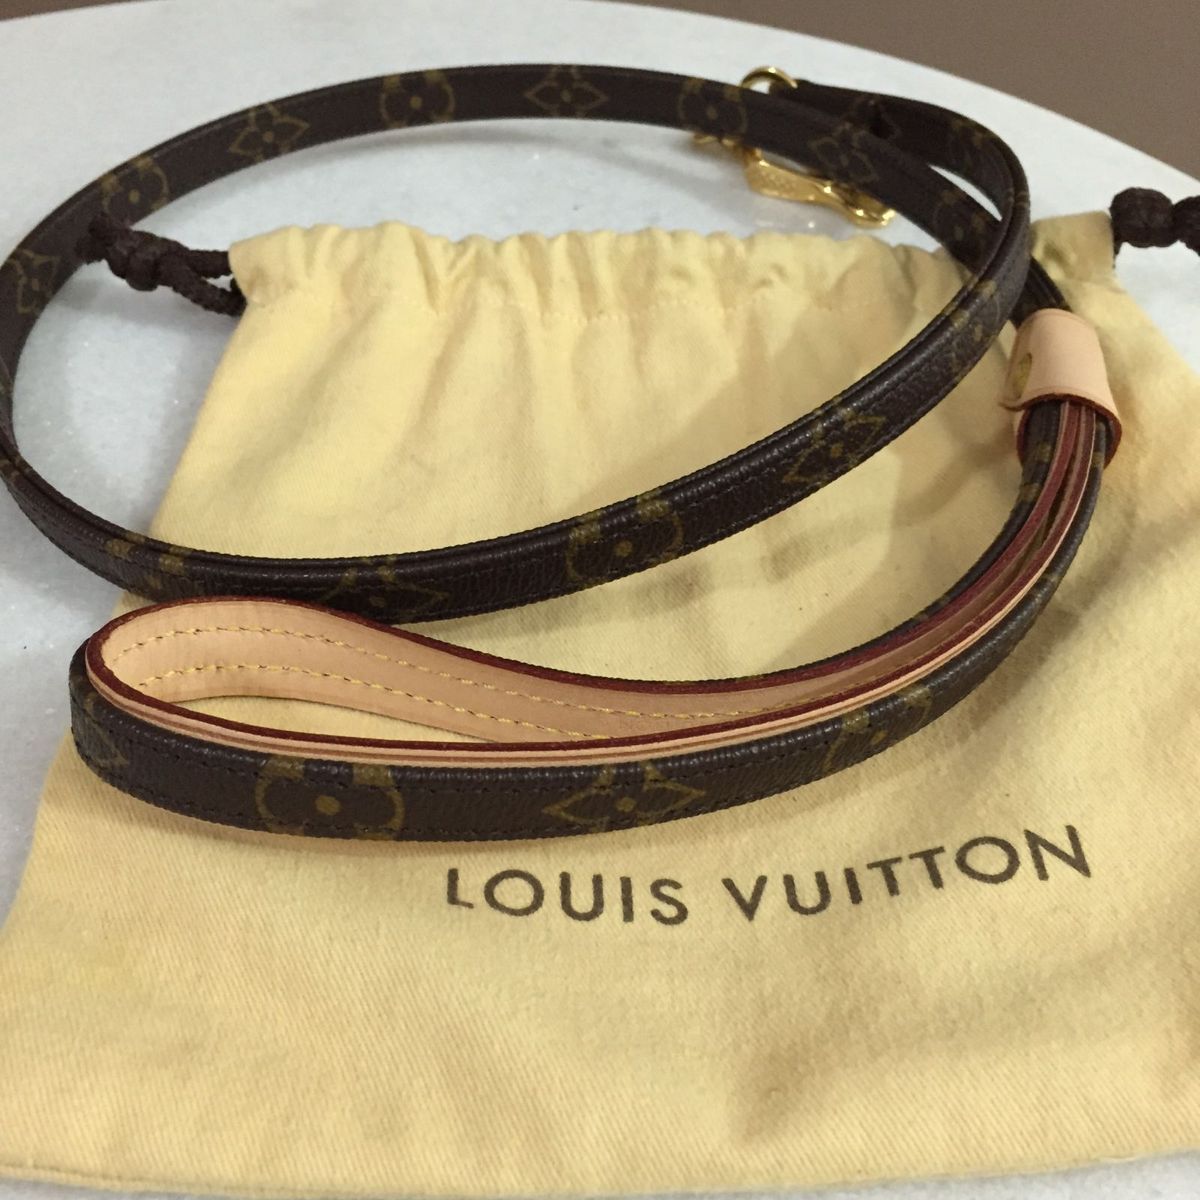 Coleira Louis Vuitton Pp, Item p/ Pet Louis Vuitton Usado 84663786